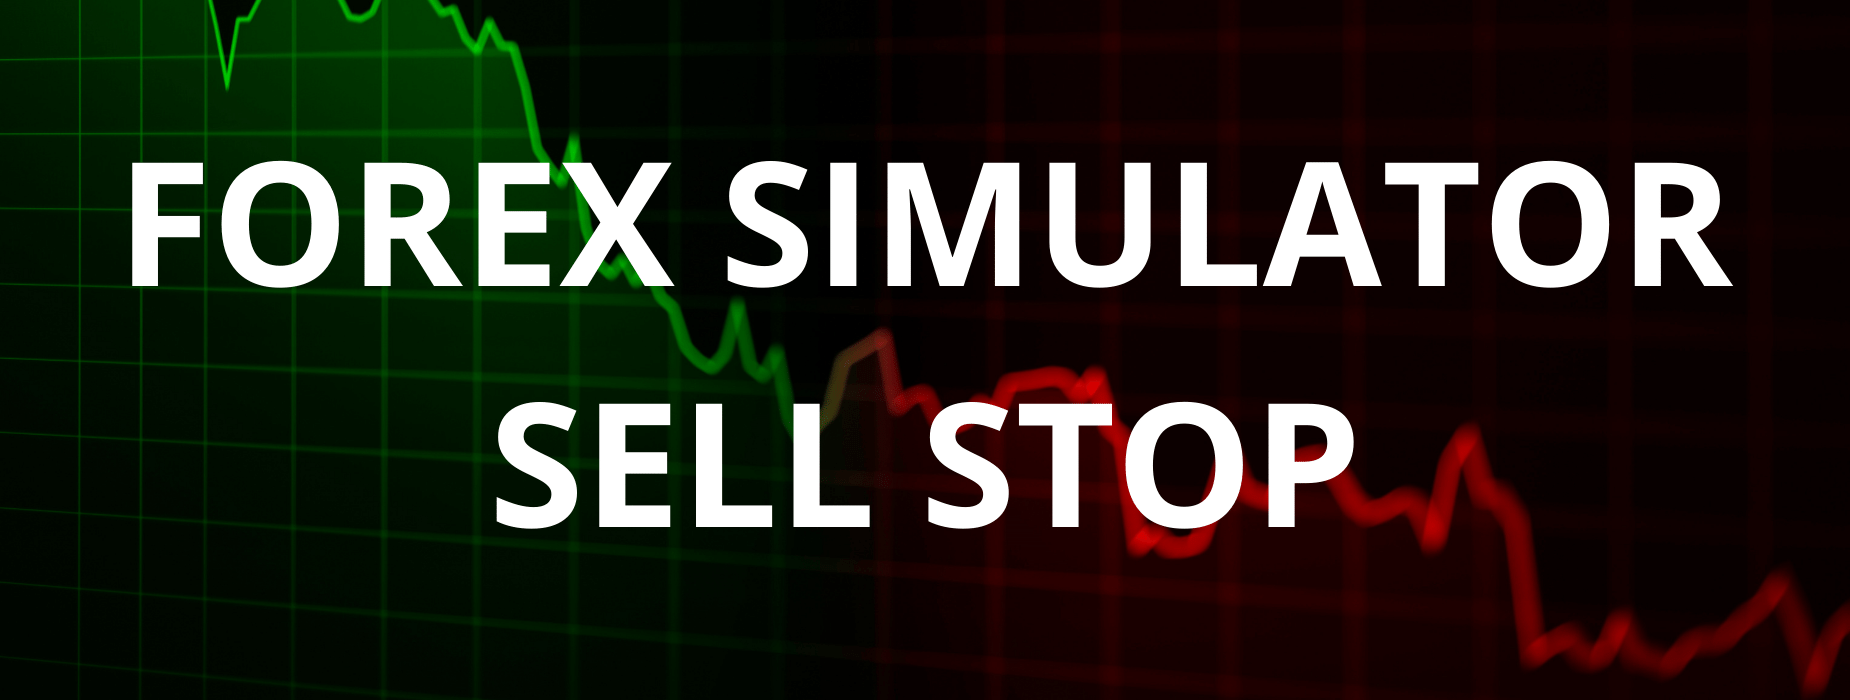 forex simulator sell stop